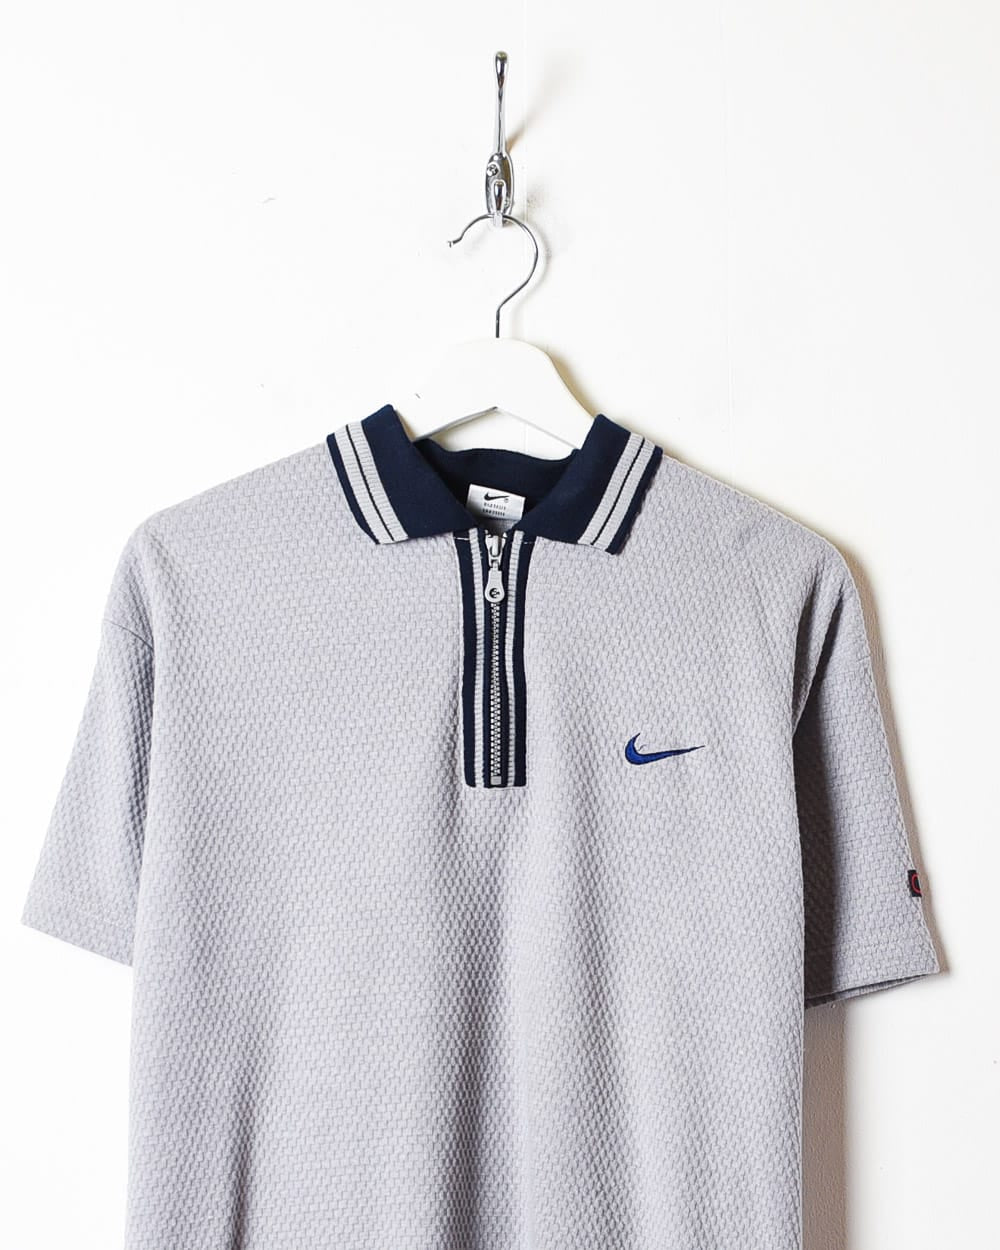 Stone Nike Textured 1/4 Zip Polo Shirt - Medium